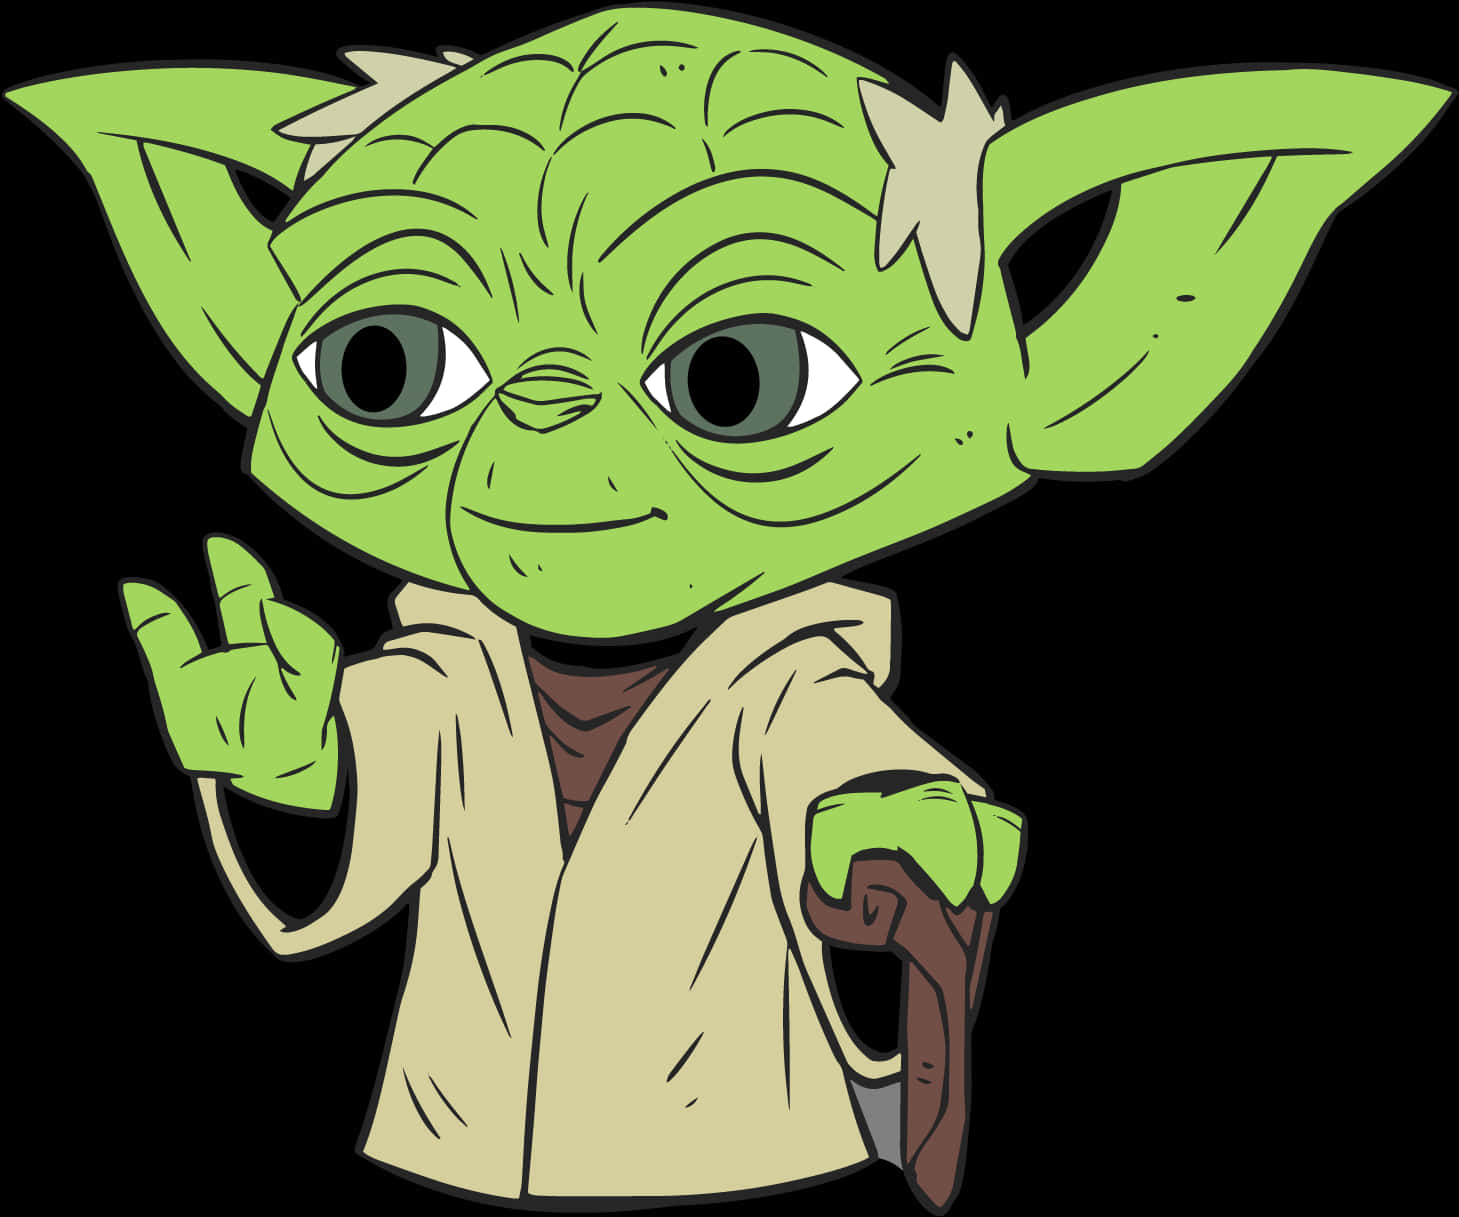 Master Yoda Cartoon Illustration PNG image